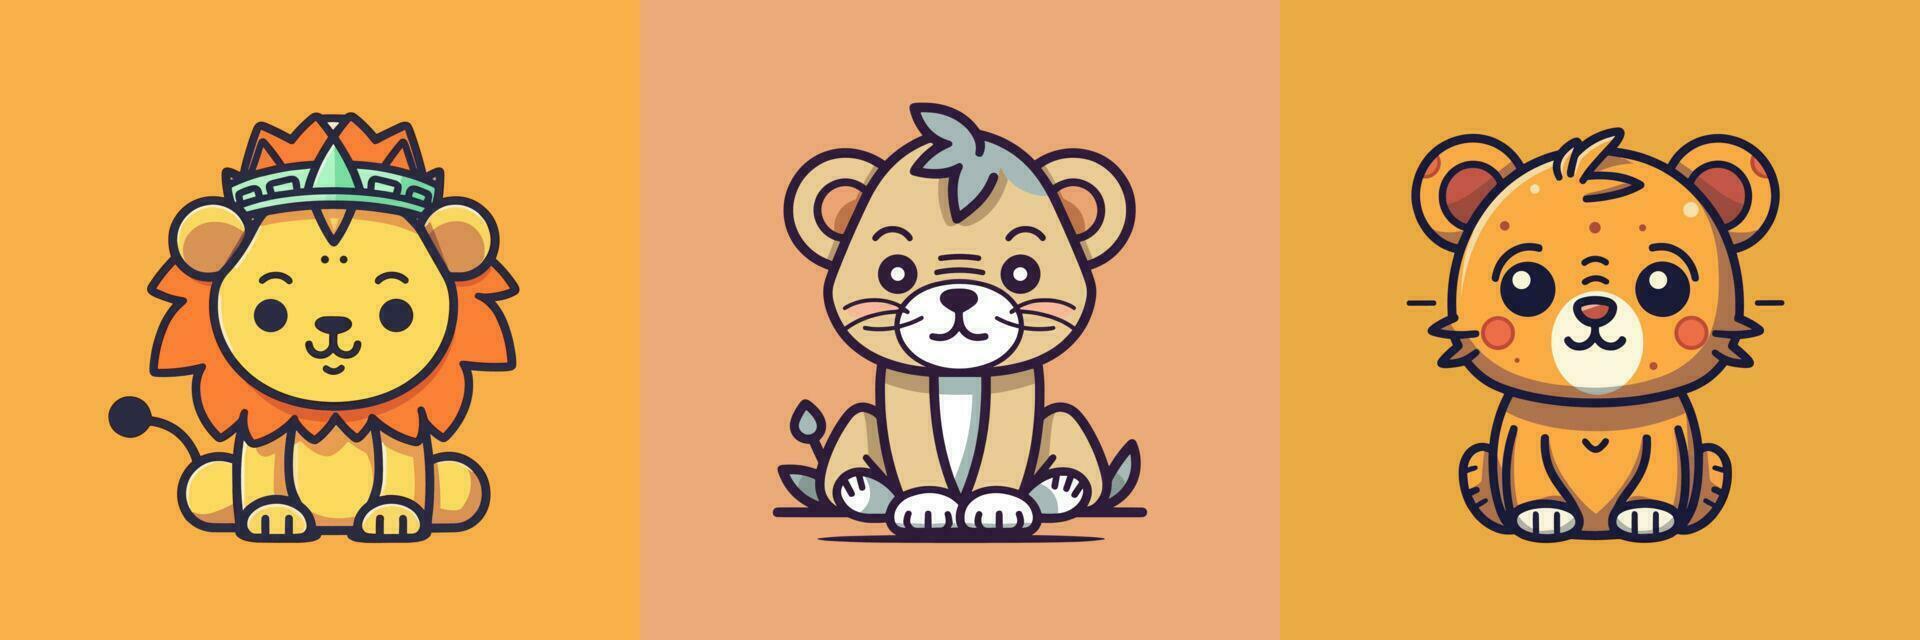 Cute kawaii lion cartoon illustration vector